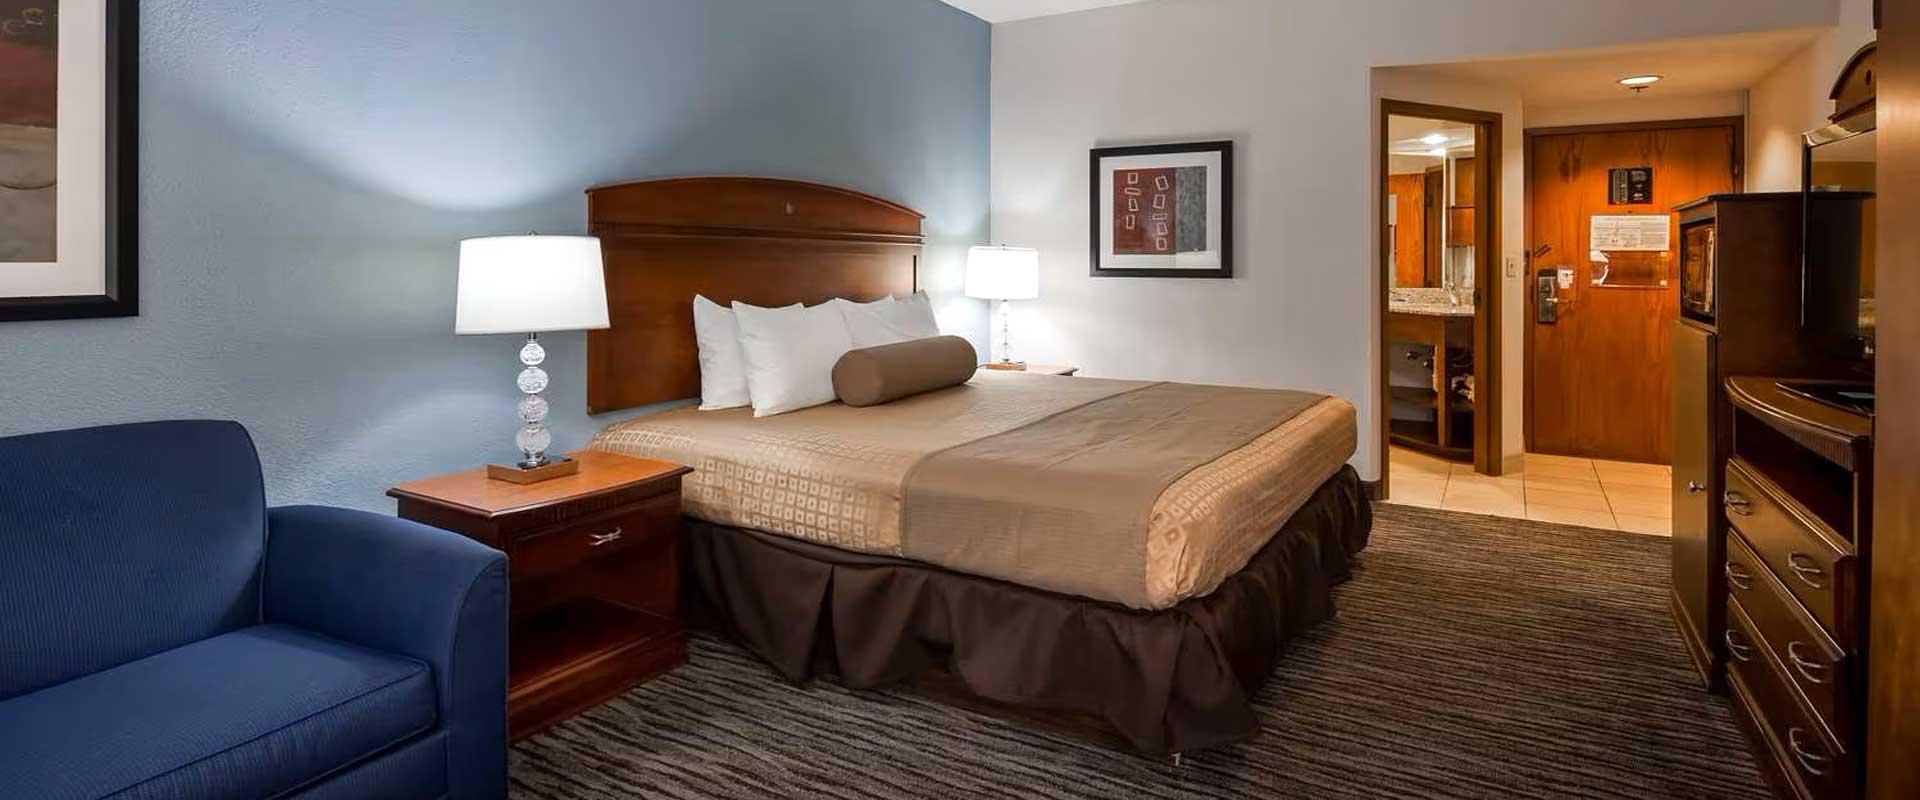 The Hotel at Dayton South | Dayton Reasonable Rates Newly Remodeled